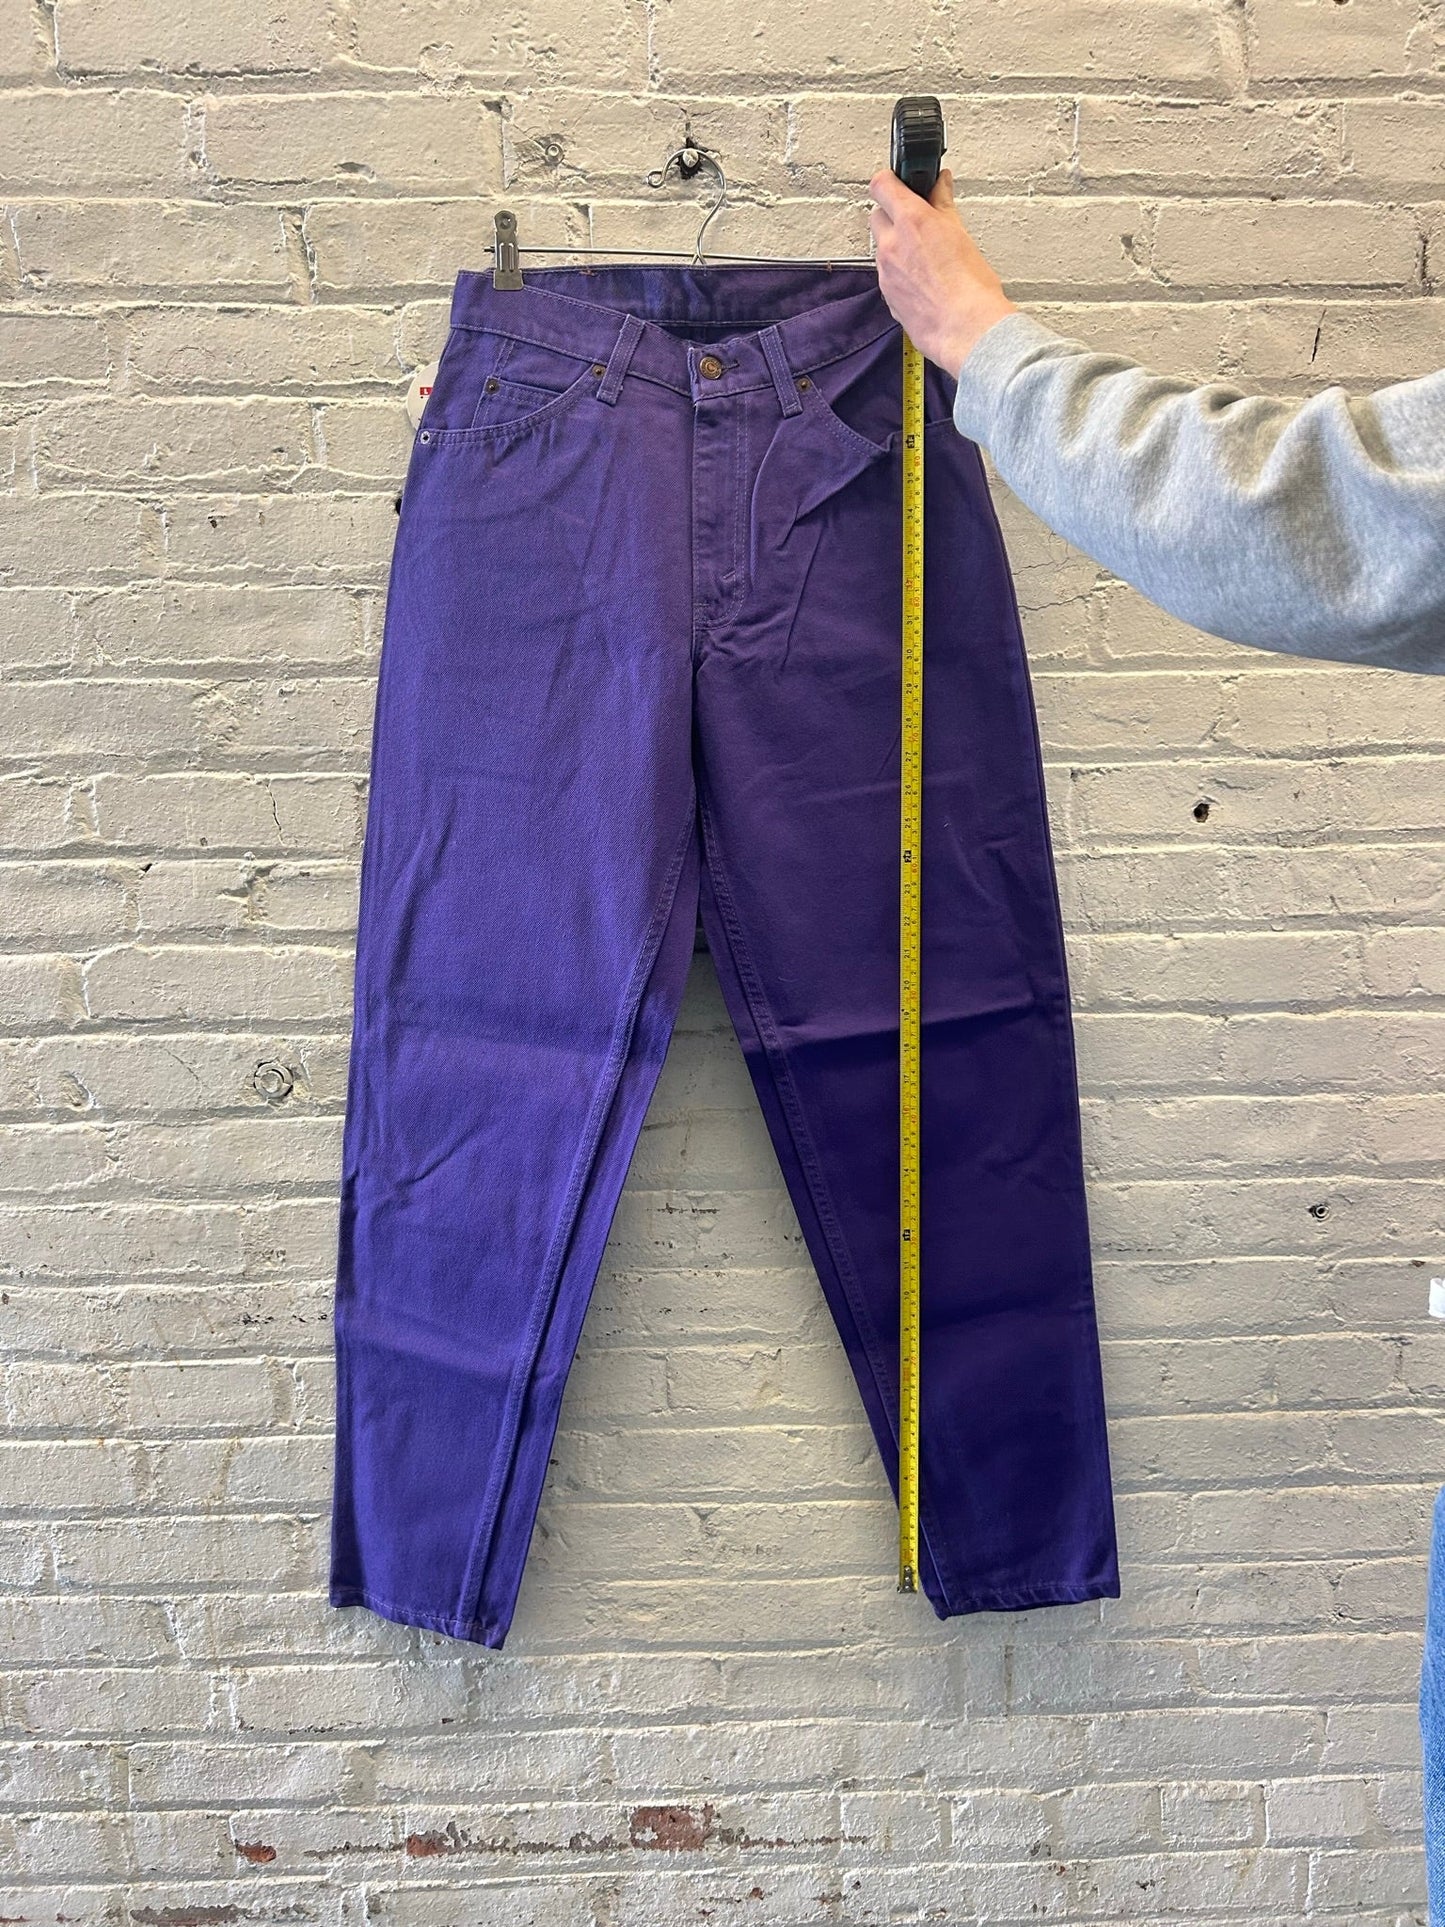 NWT Levi's 560 Purple Jeans